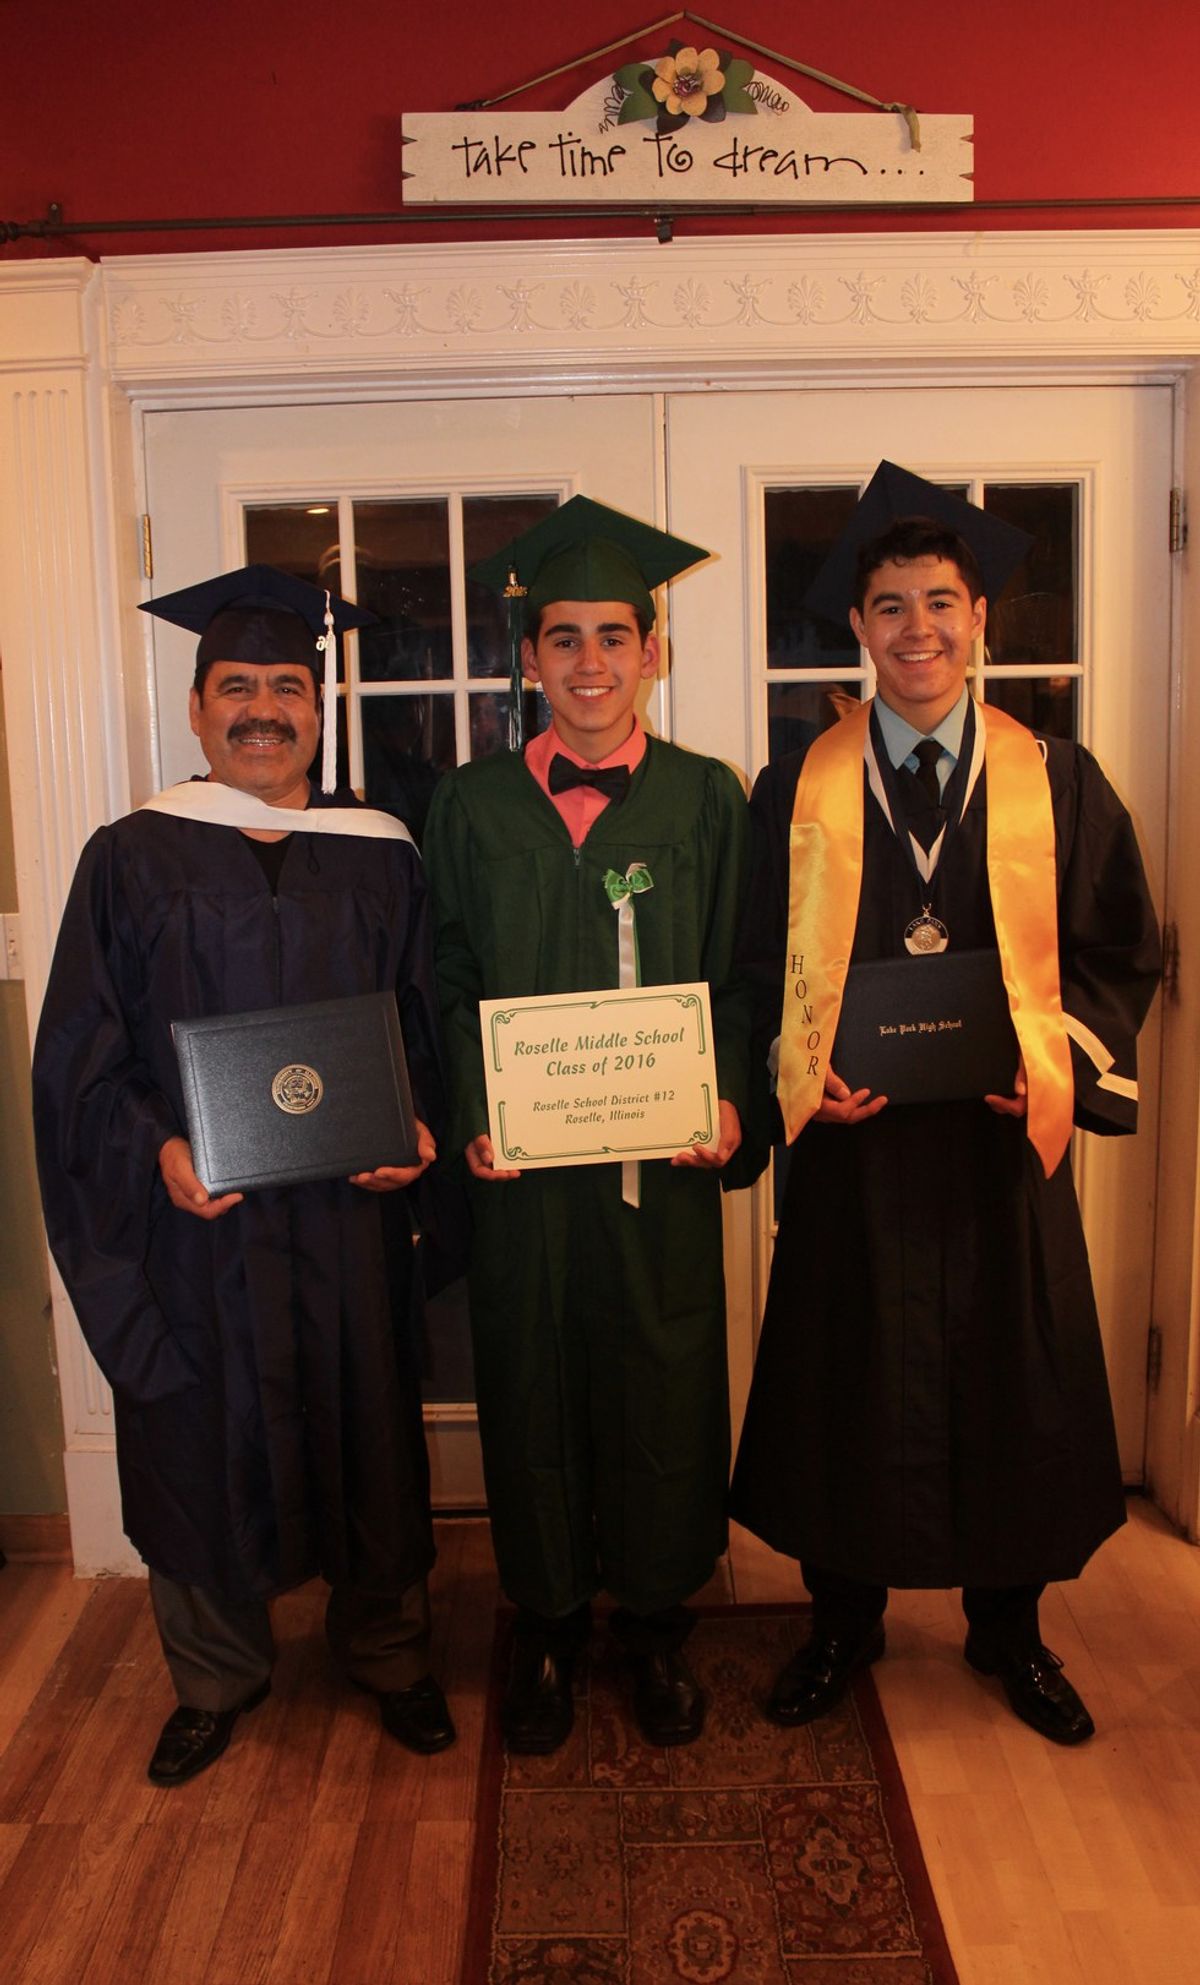 The 3 Graduateers: My Boys